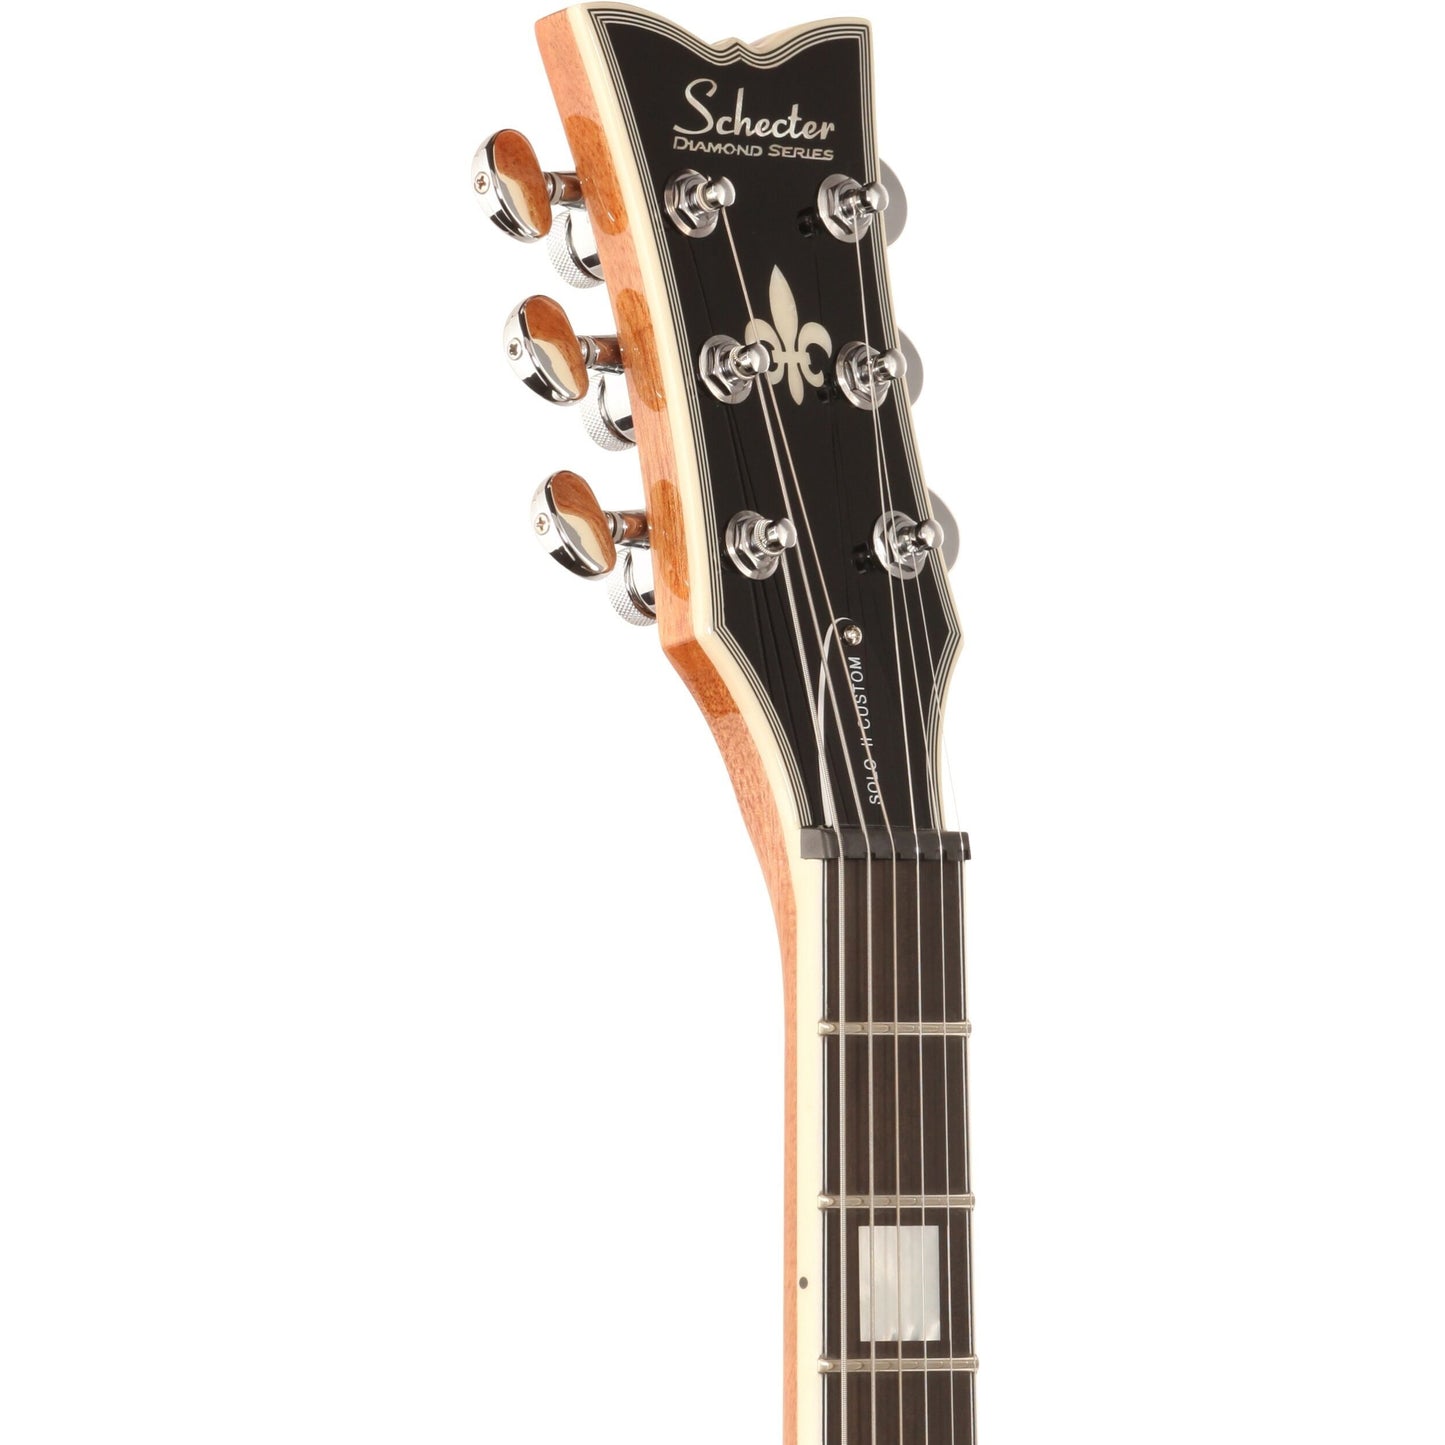 Schecter Solo II Custom Electric Guitar, Transparent Black Burst, Chrome Hardware